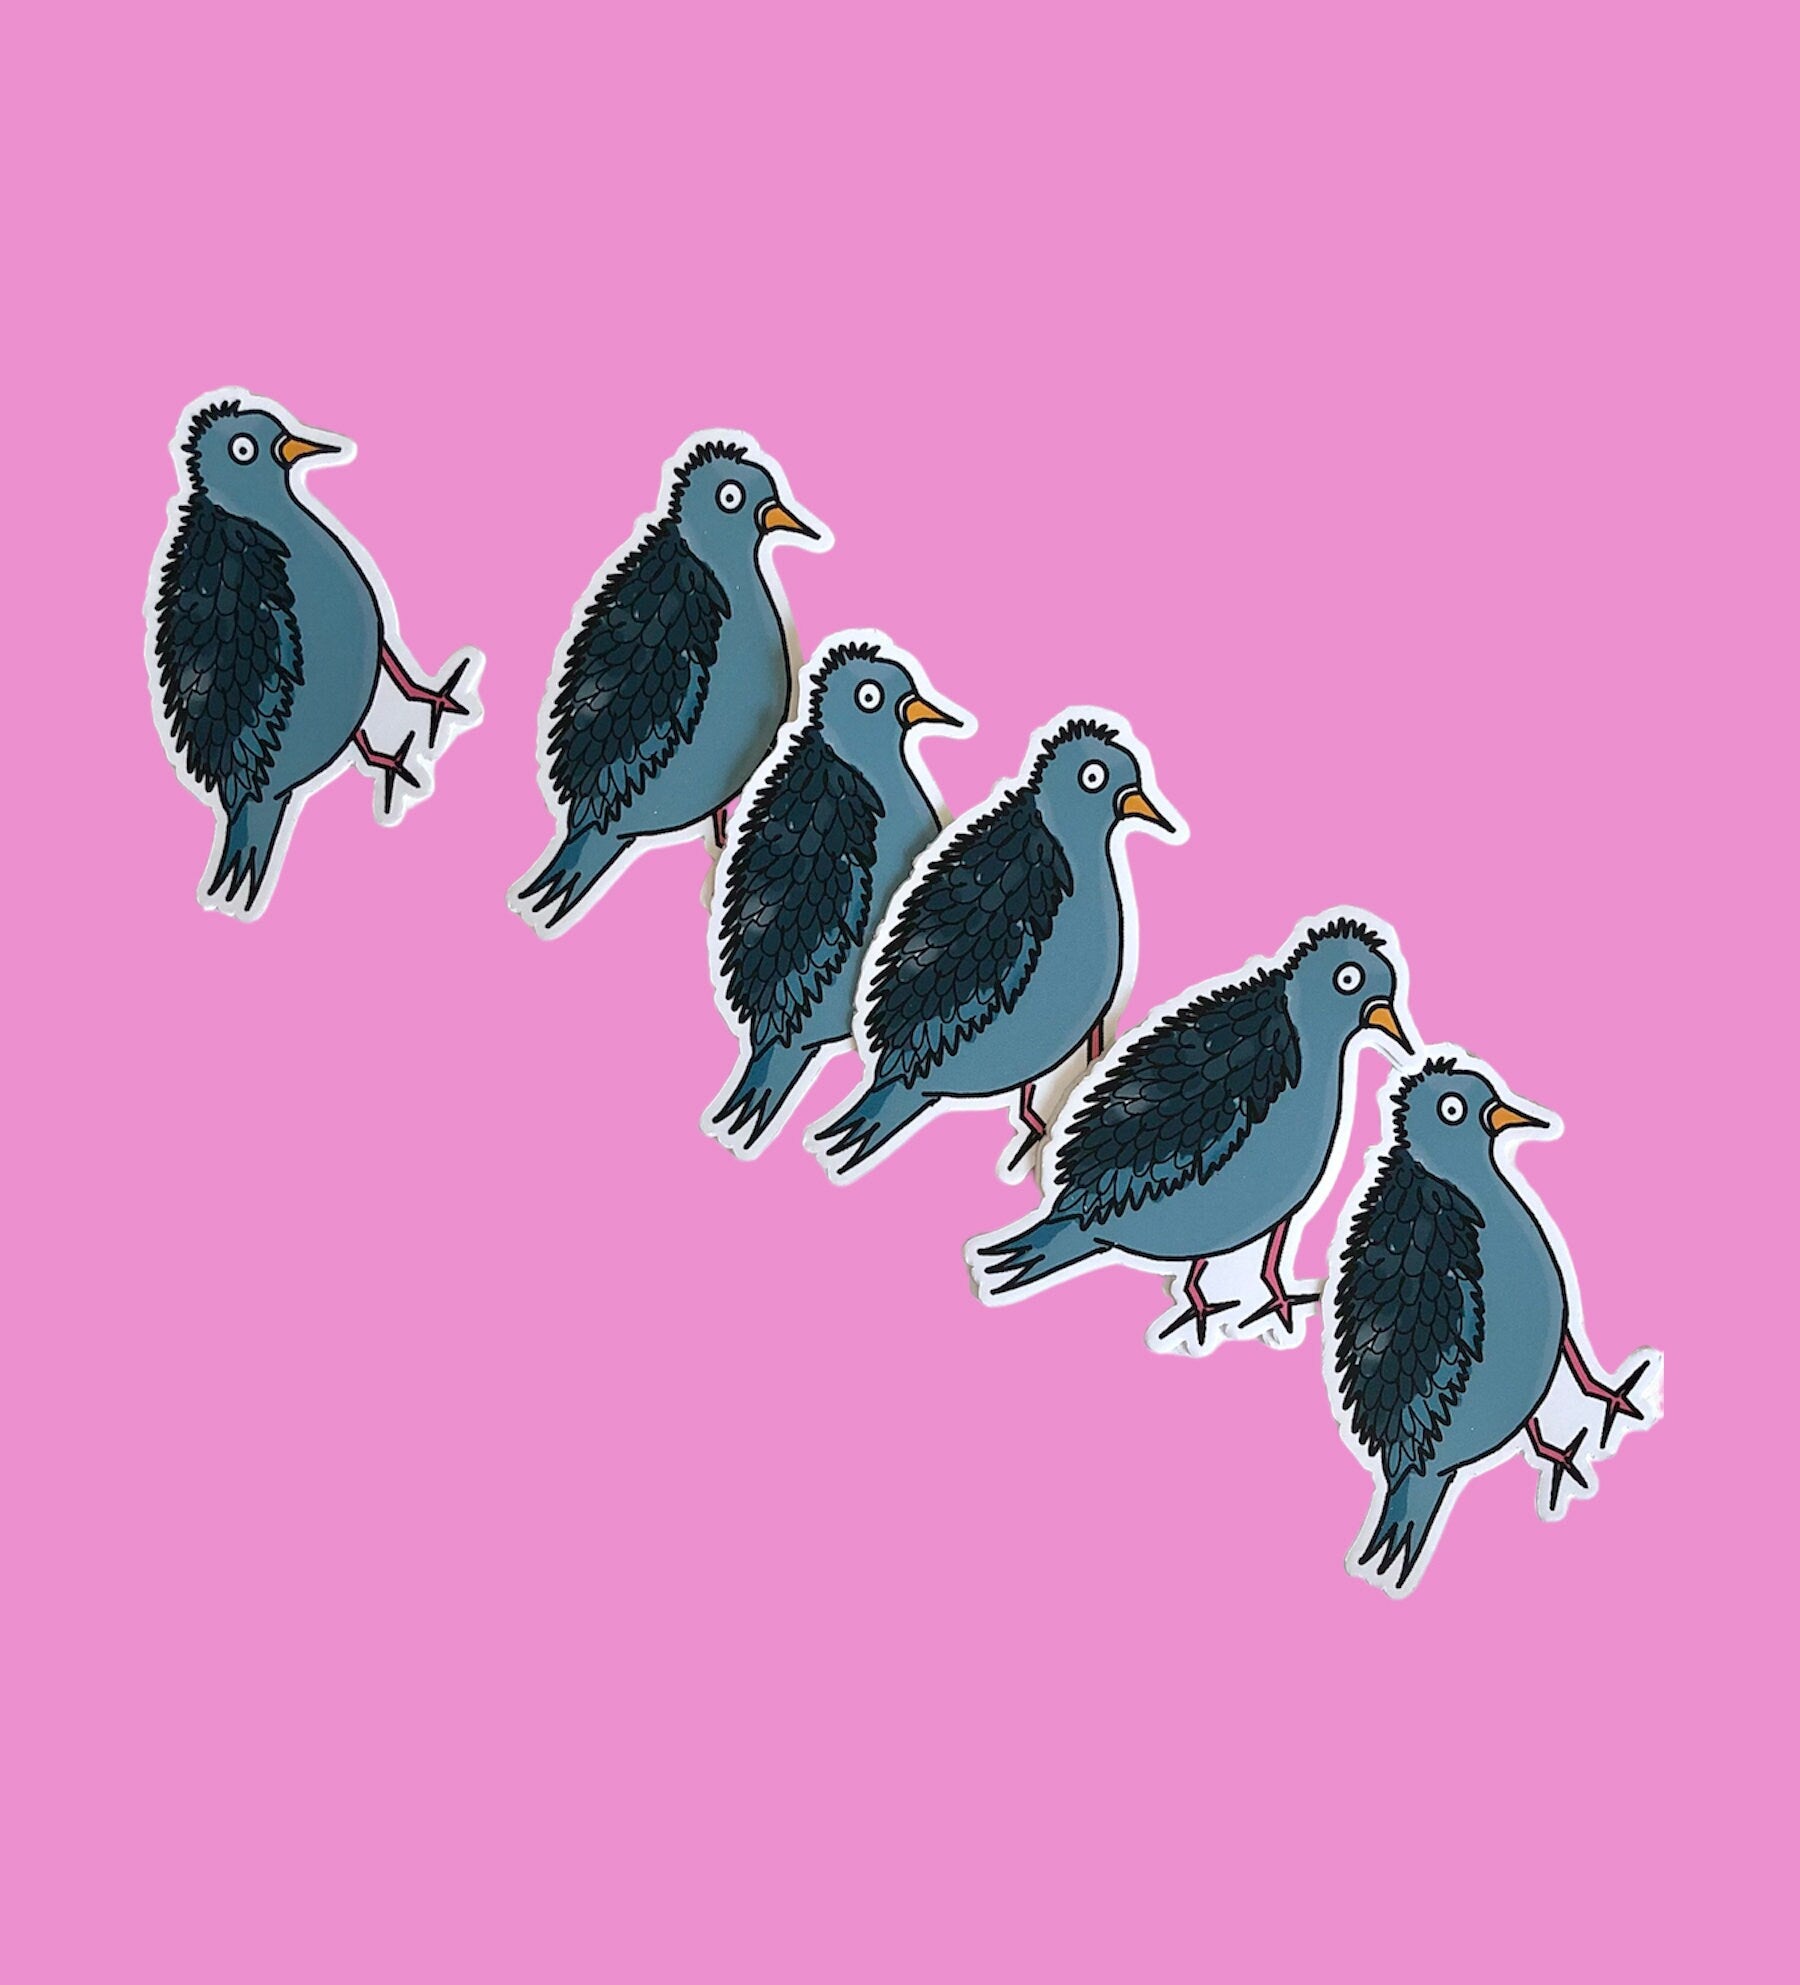 confused pigeon sticker, funny bird sticker for laptop, planner sticker, bird lover gift, durable mangy pigeon sticker gift for friend